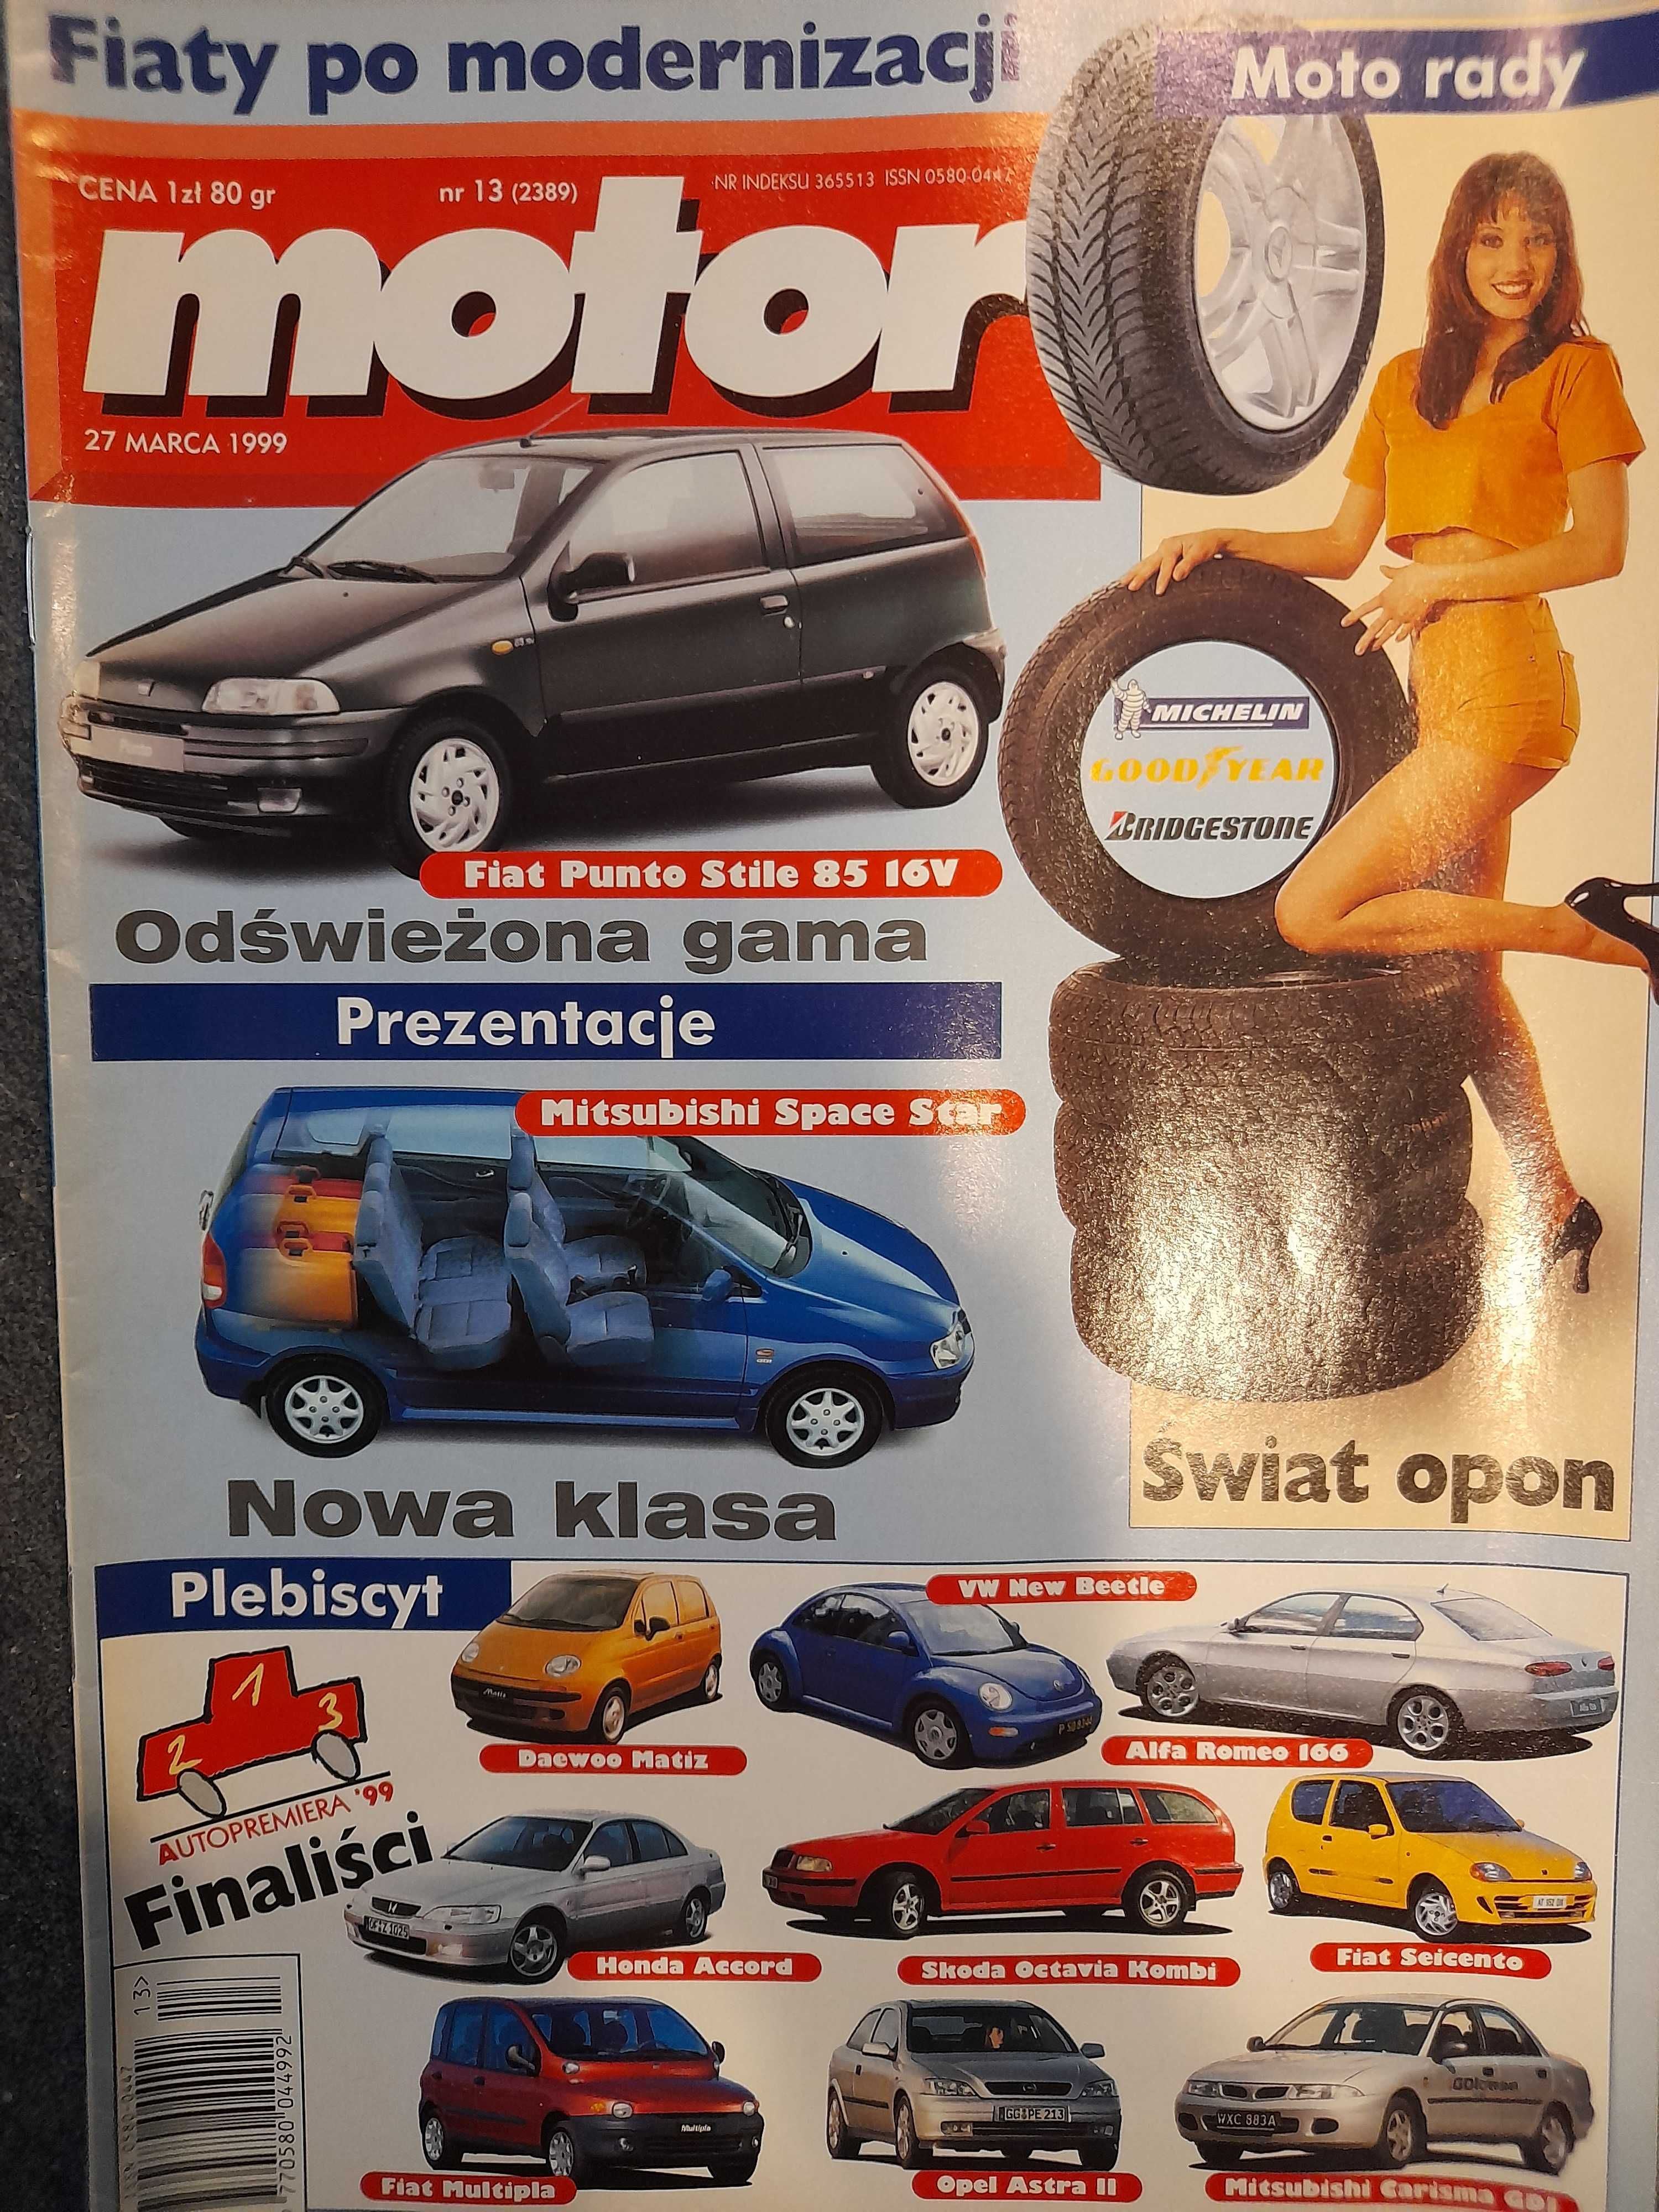 MOTOR Punto Stile, Honda Zero, Alfa 156 Selespeed i in, rok 1999